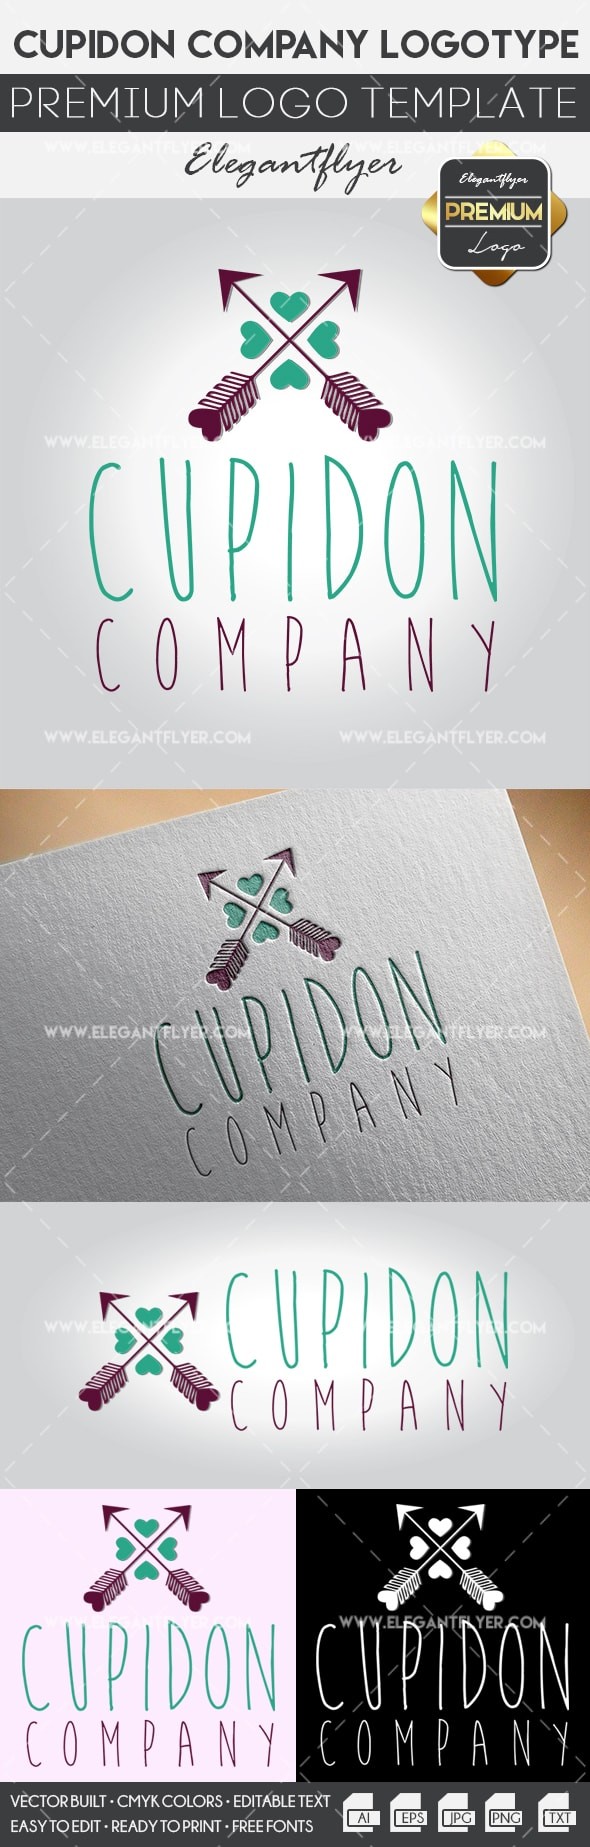 Cupidon Company by ElegantFlyer